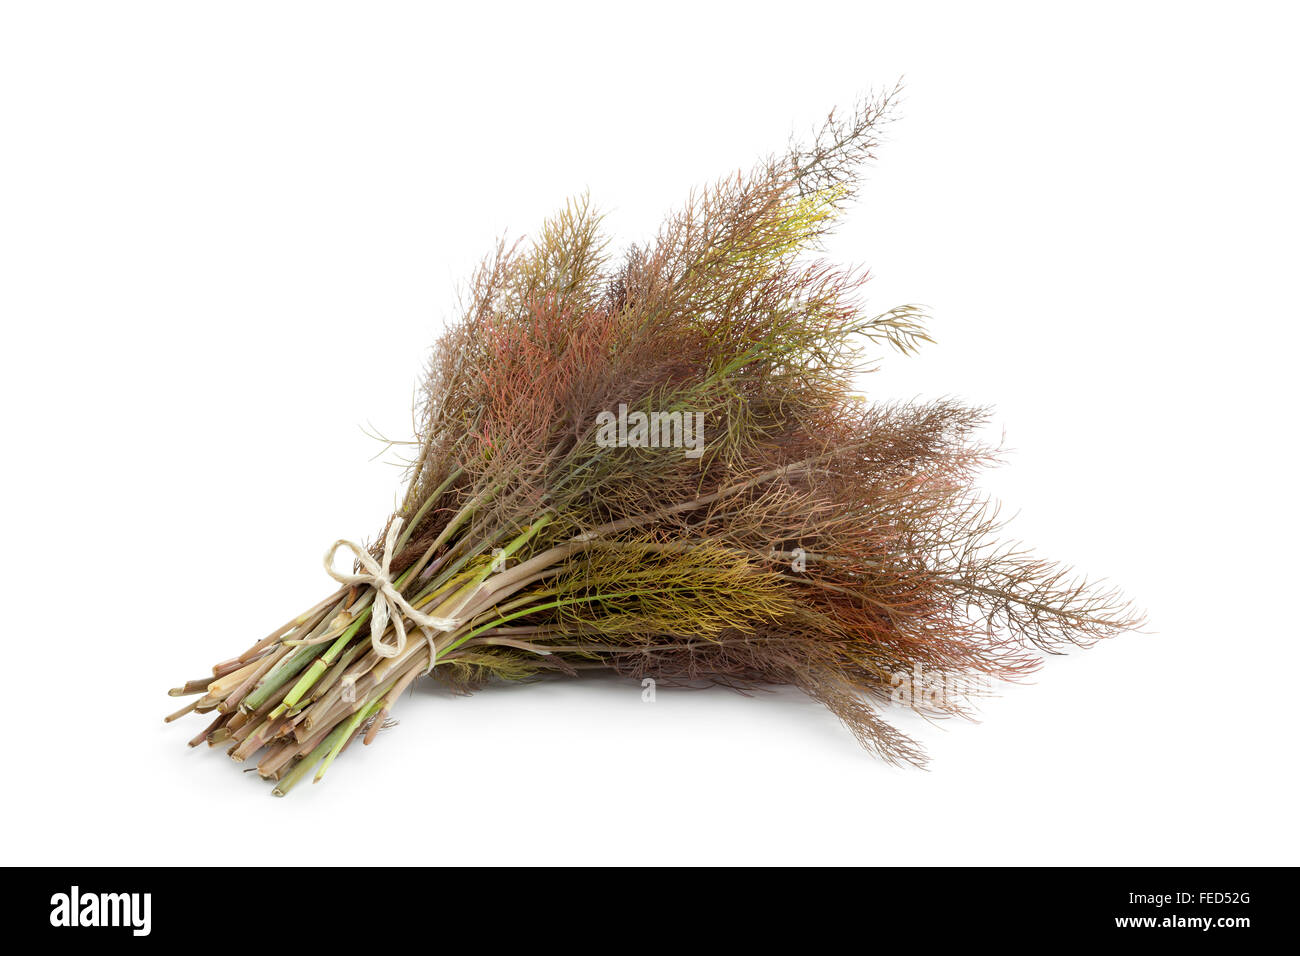 Bunch of fresh bronze fennel on white background Stock Photo